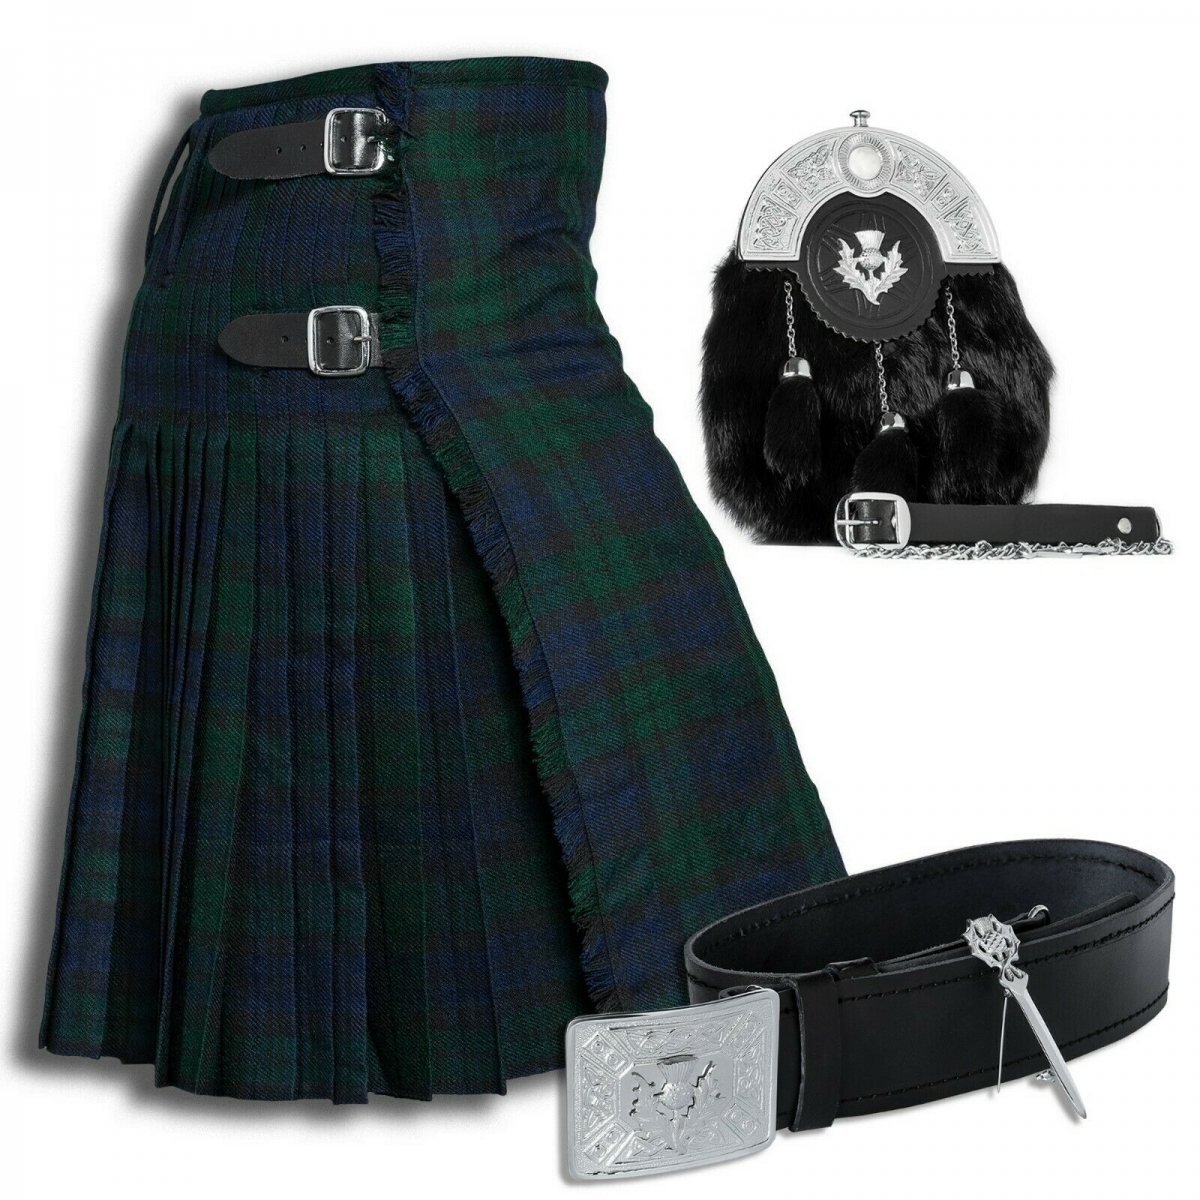 Black Watch Side 05 Pieces Kilt Accessories for Men, Scottish Outfit